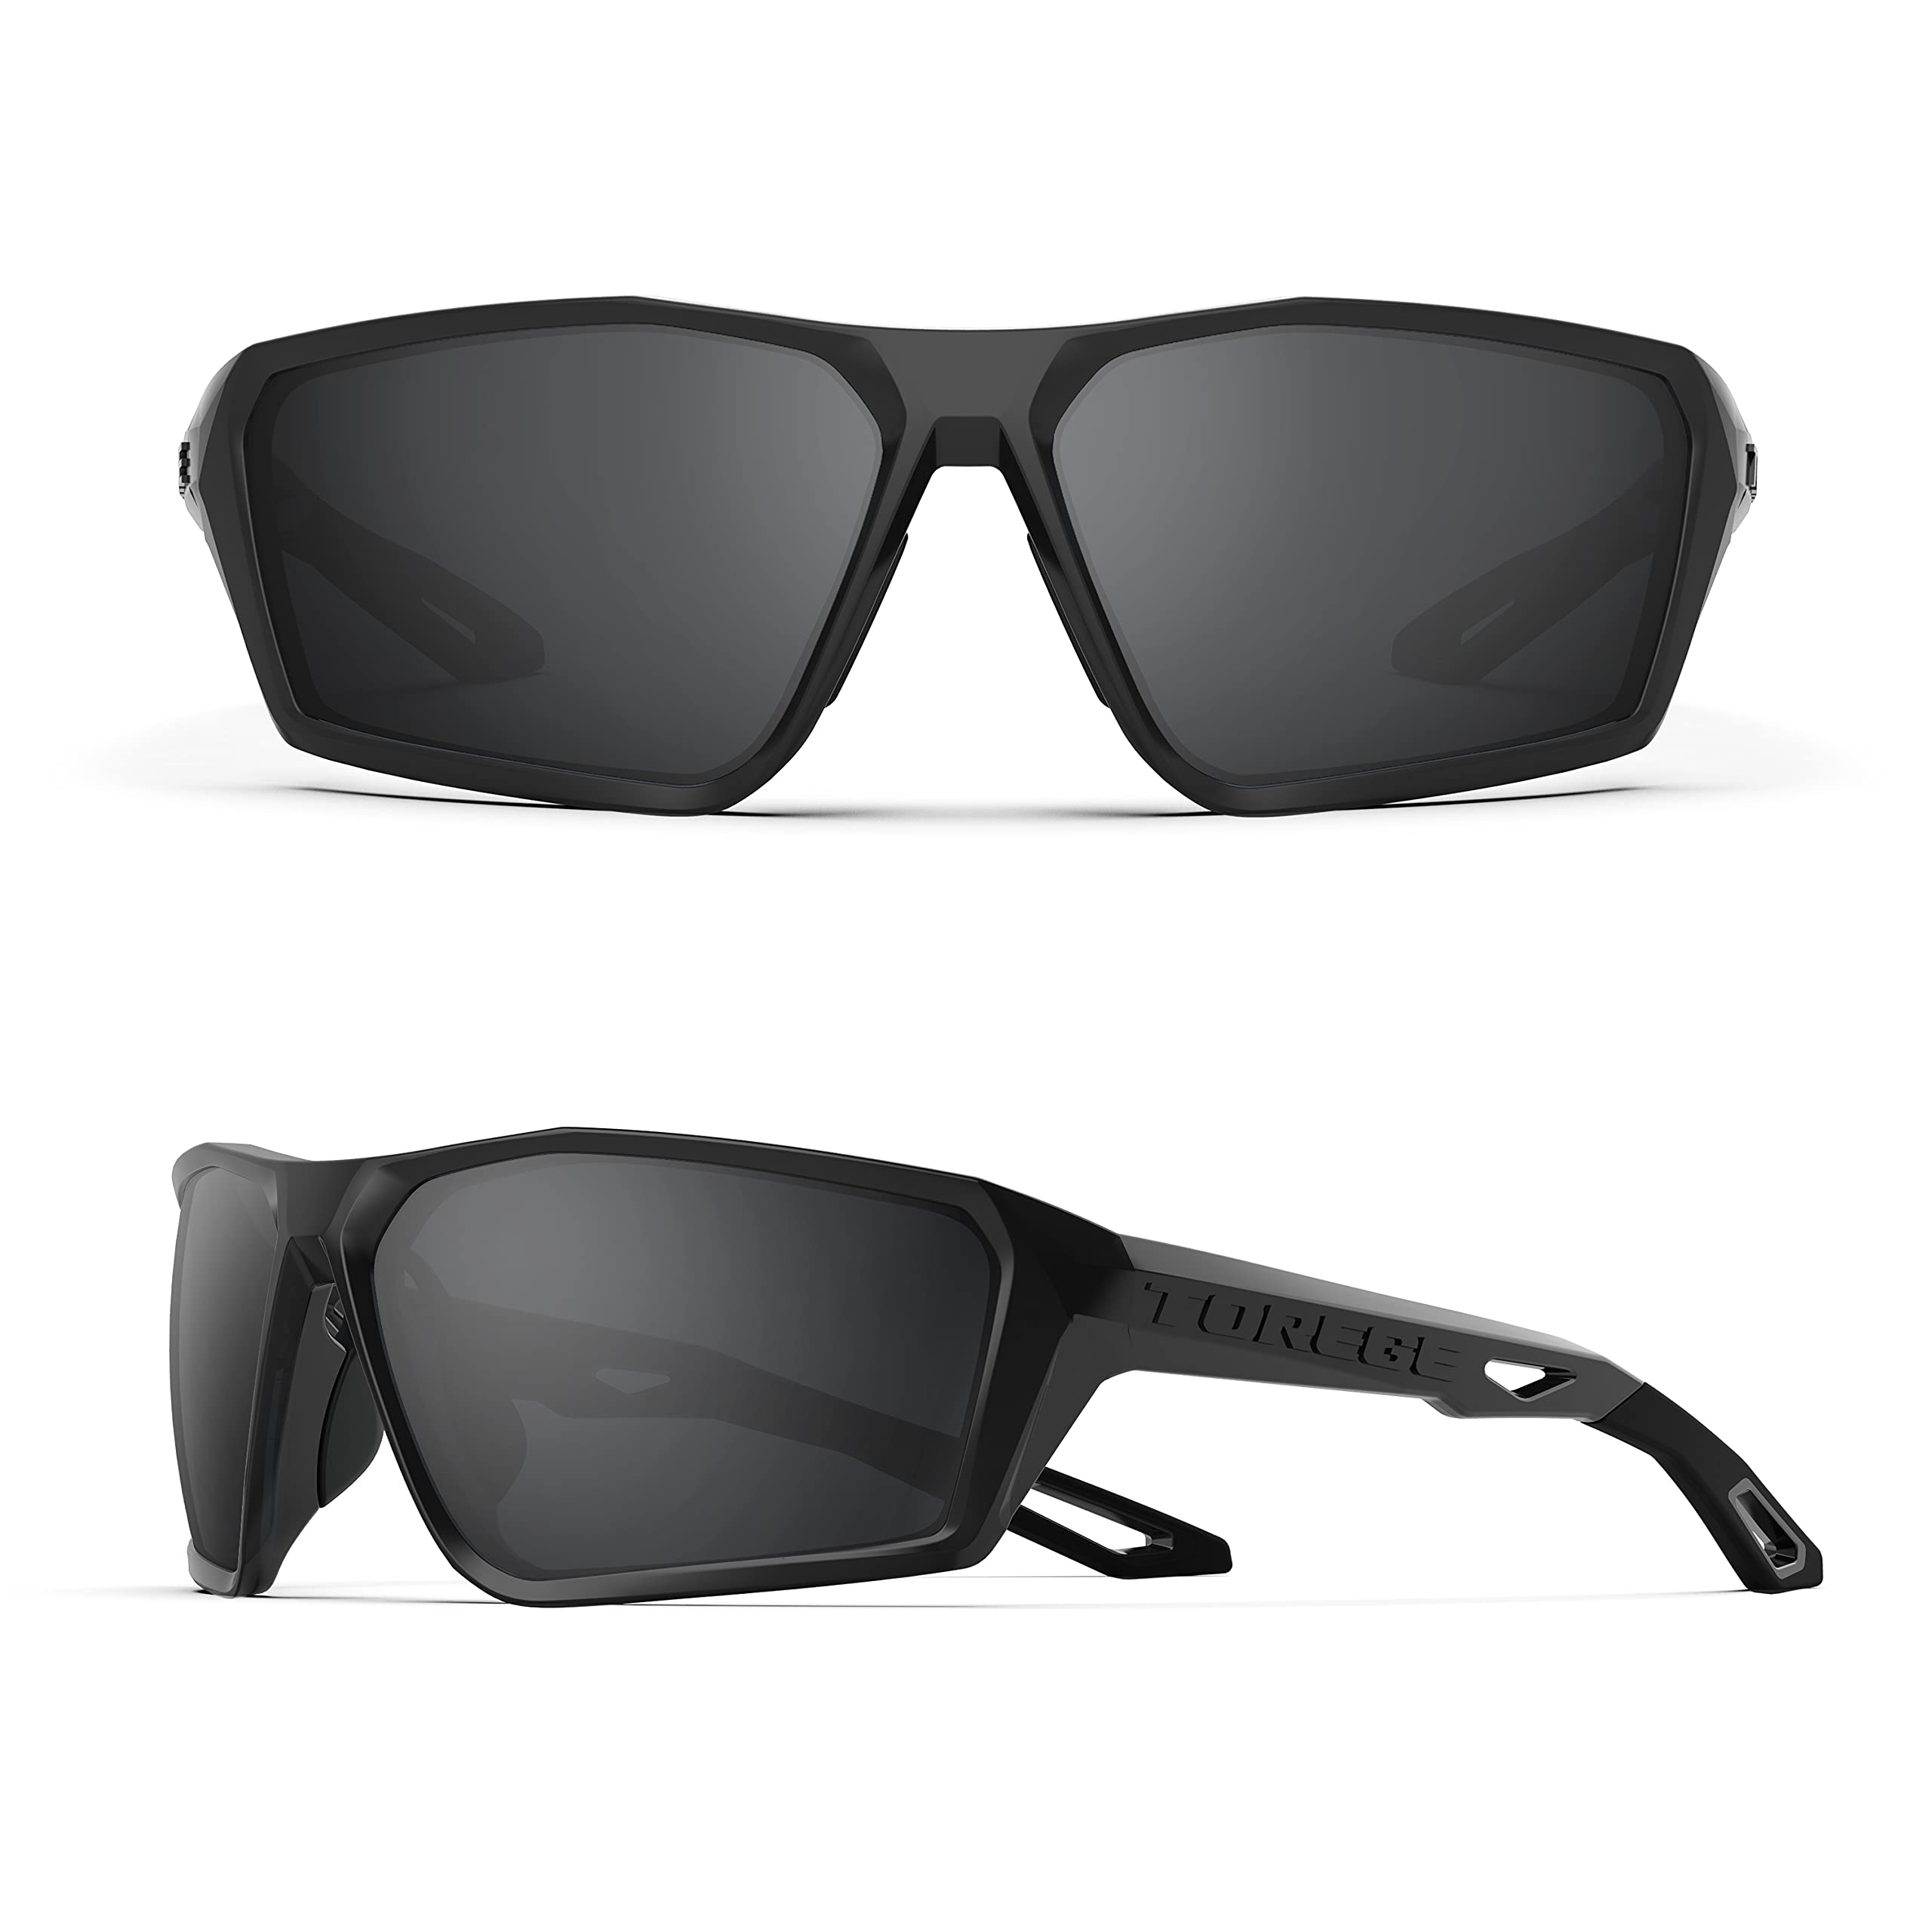 TOREGE Polarized Sports Sunglasses for Men Women Shooting Cycling